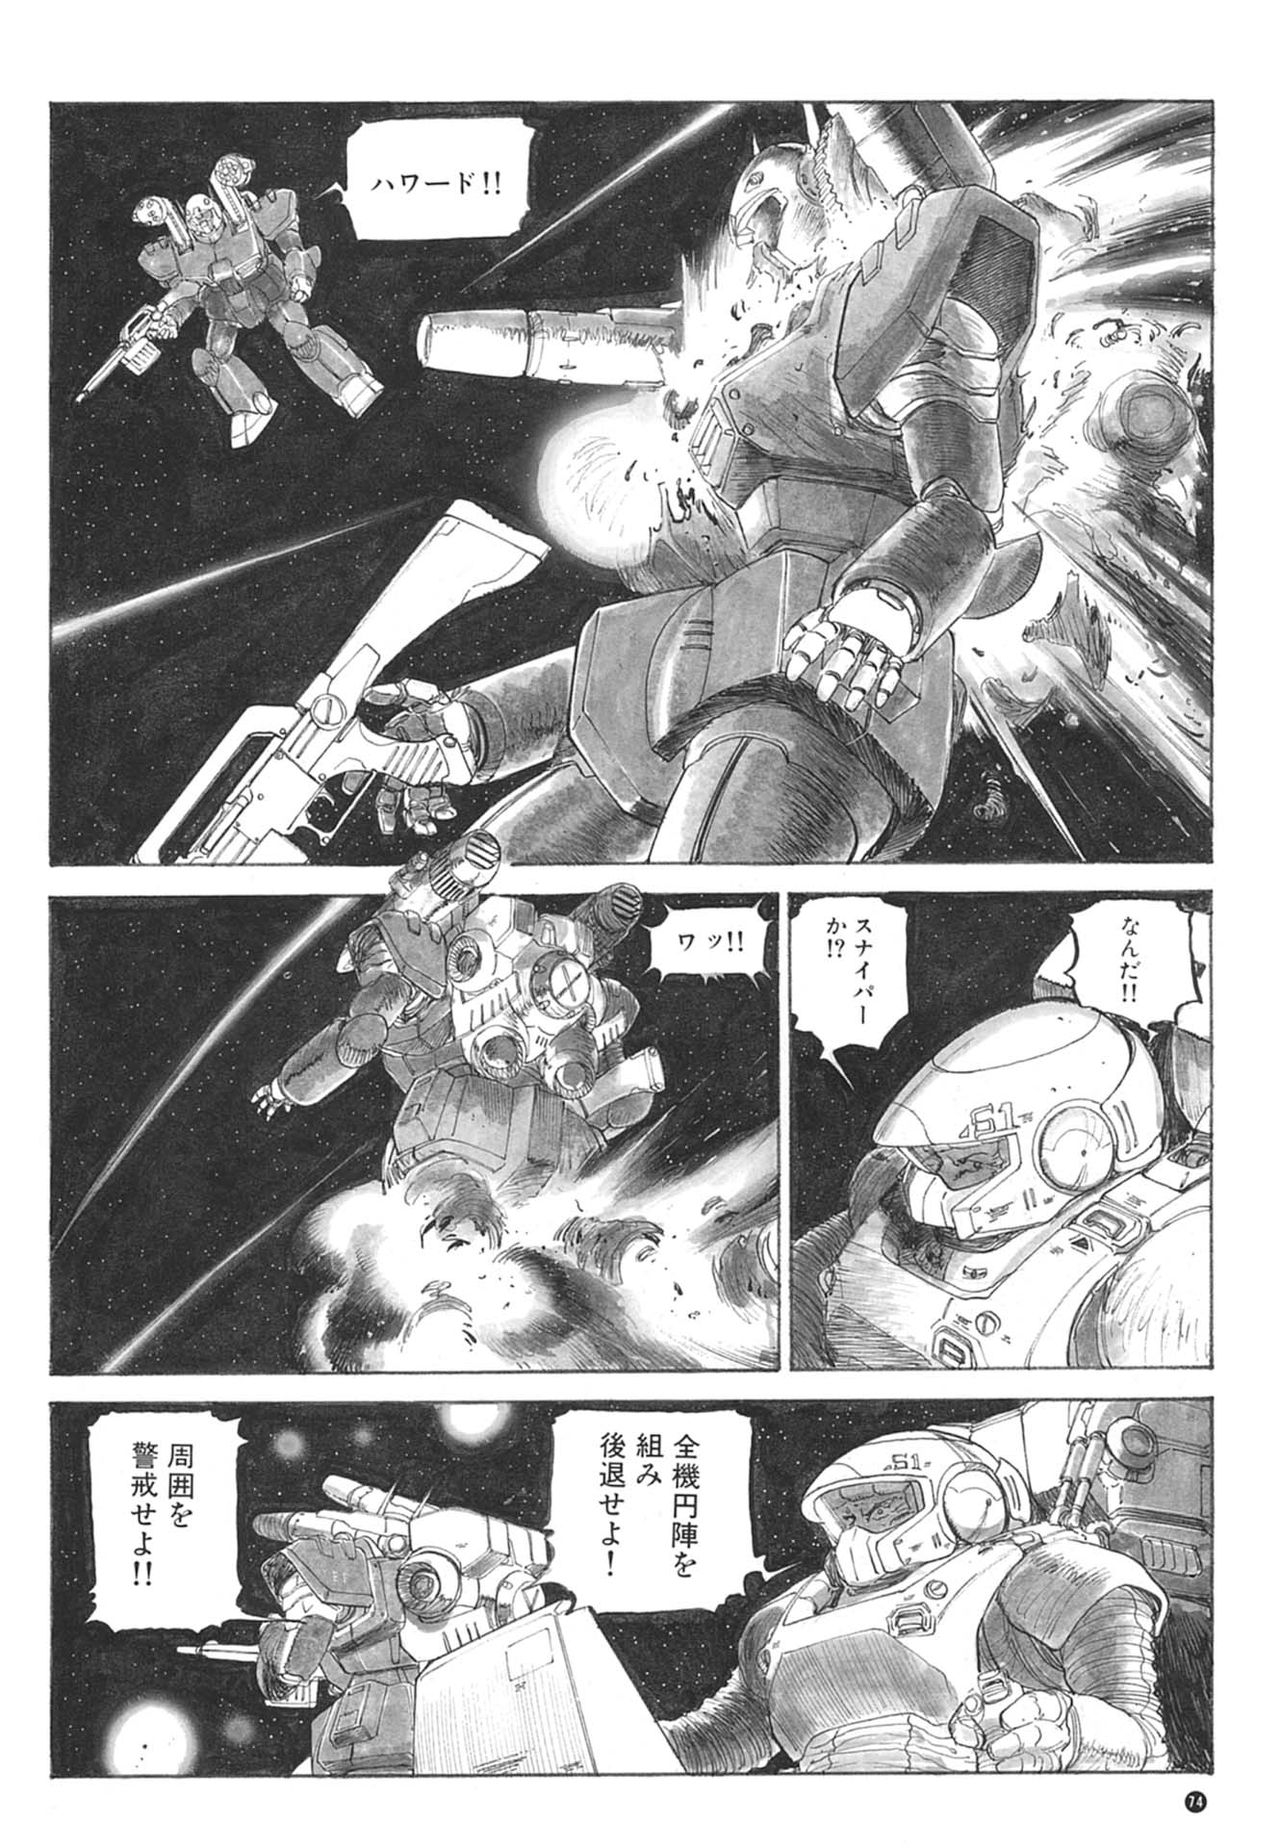 [Kazuhisa Kondo] Kazuhisa Kondo 2D & 3D Works - Go Ahead - From Mobile Suit Gundam to Original Mechanism 73